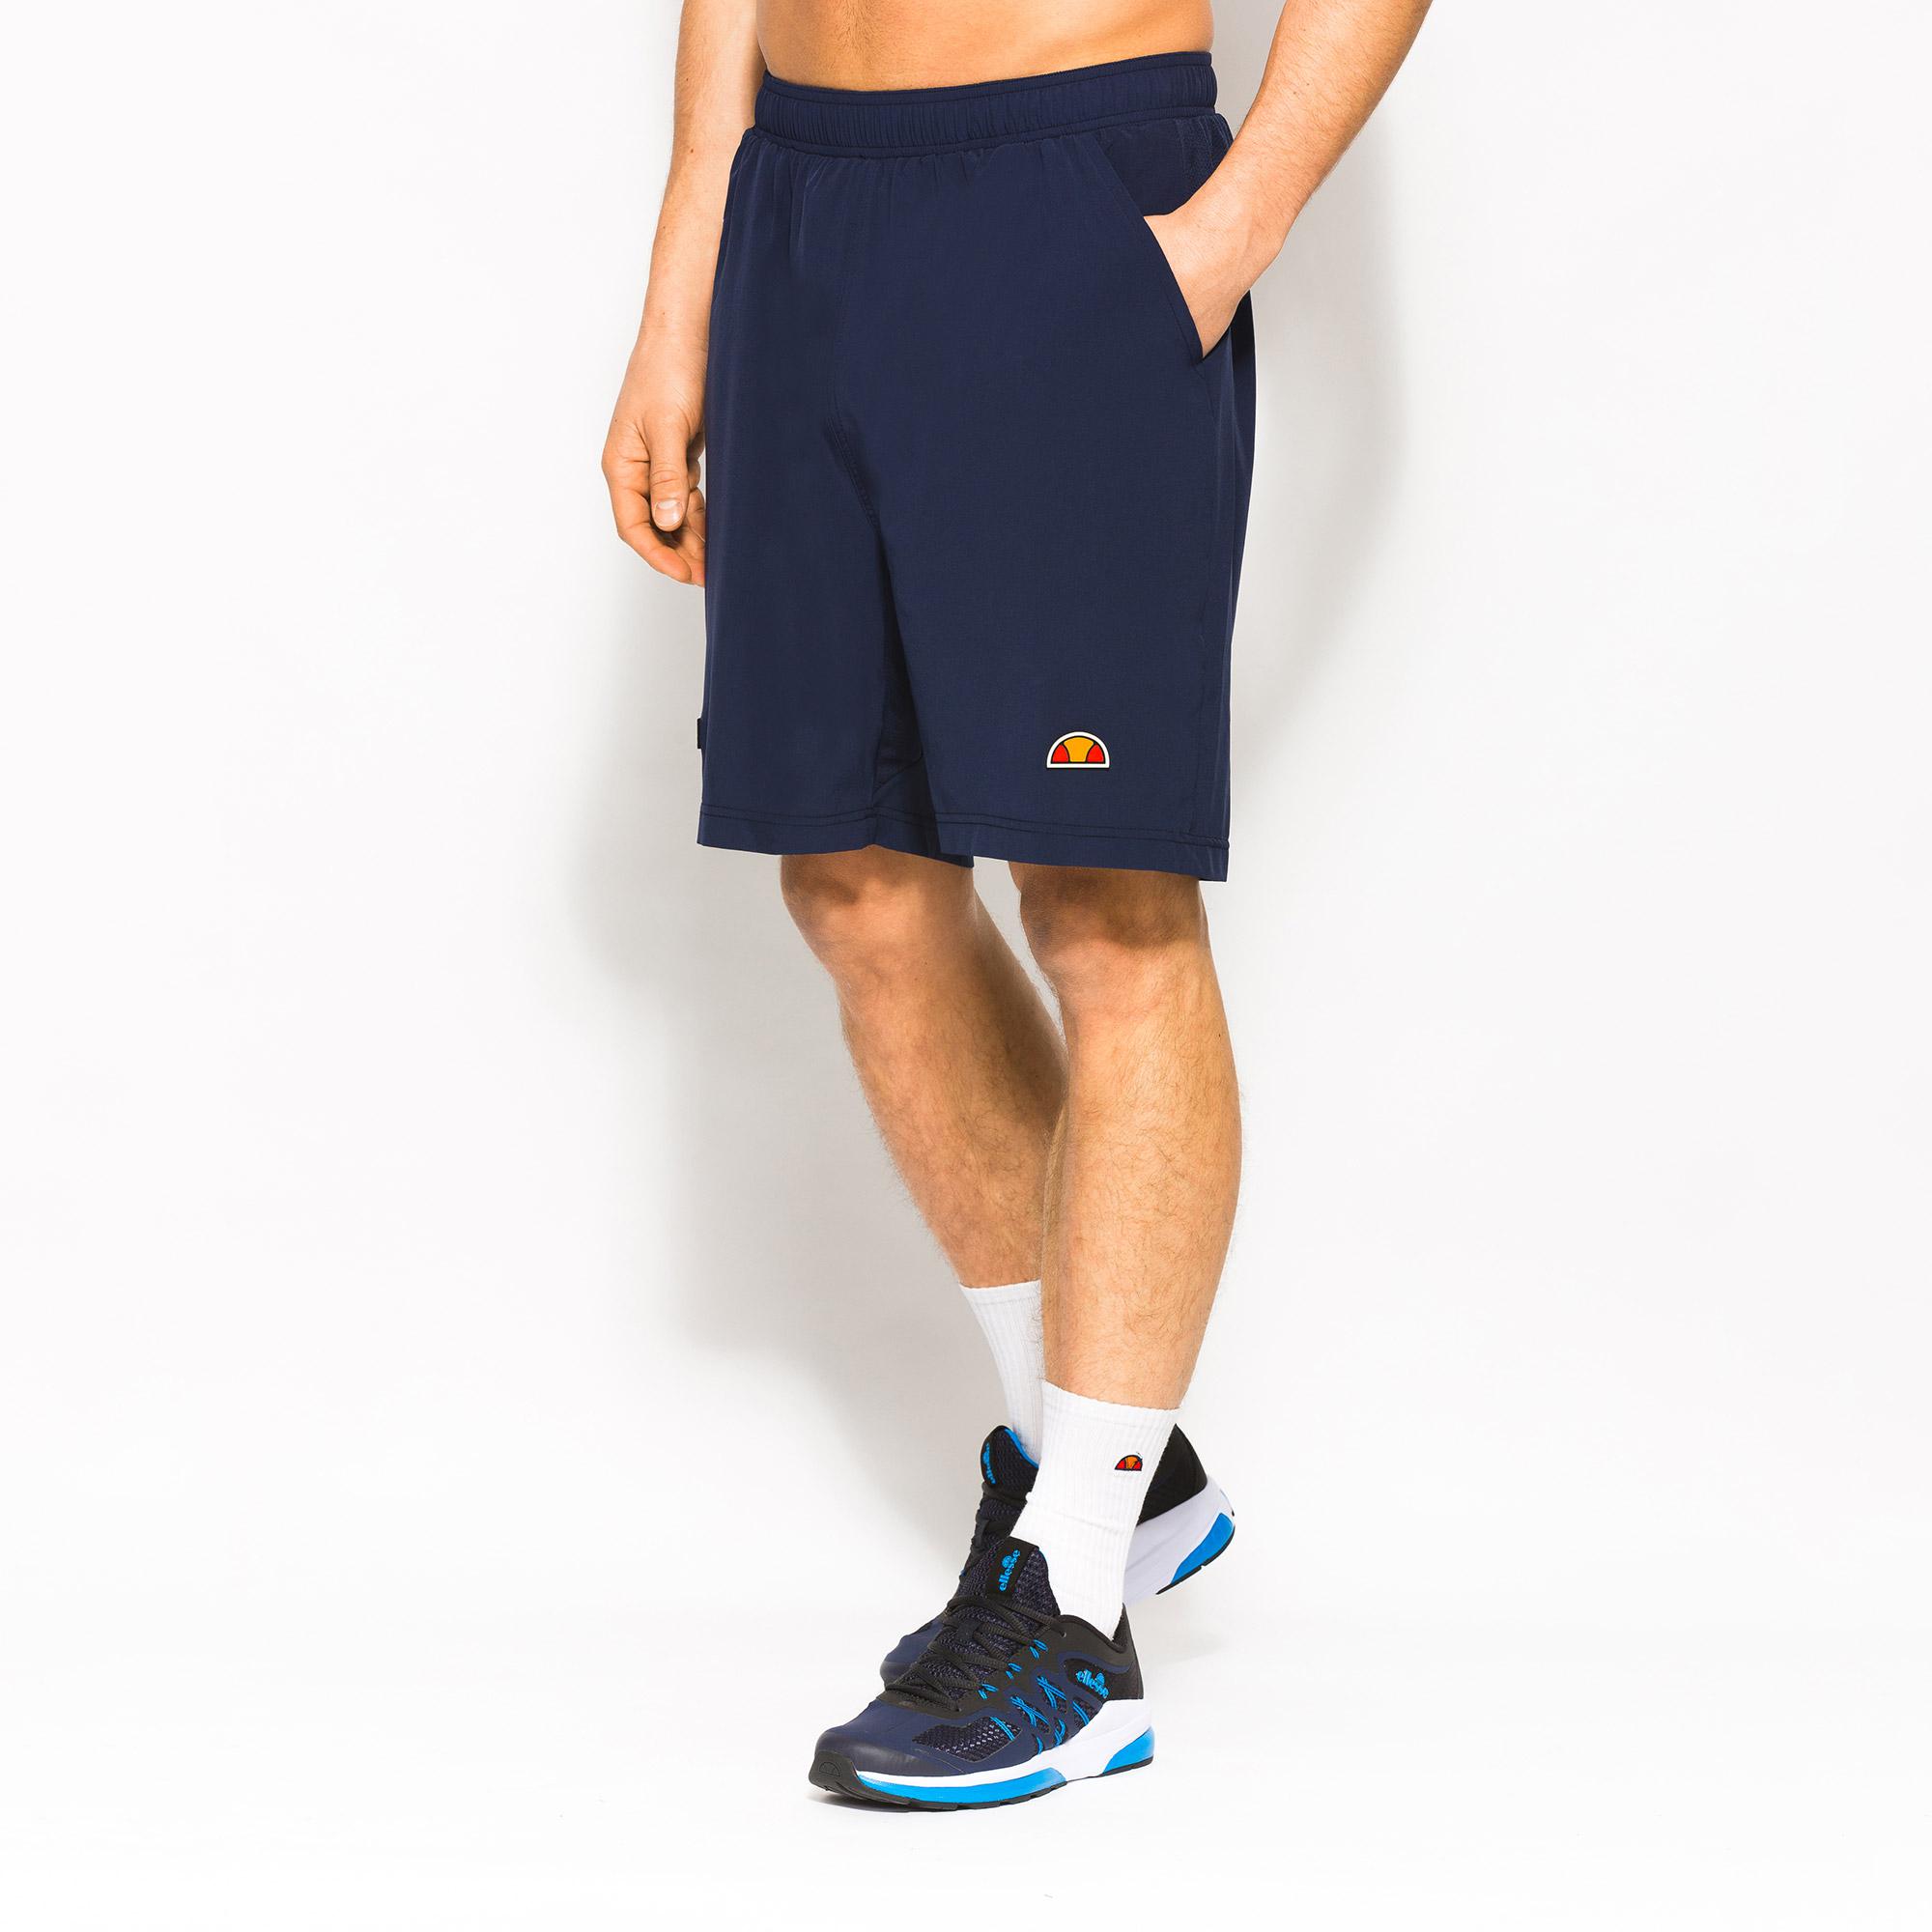 Ellesse Mens Rizzo 7 Inch Shorts - Peacoat - Tennisnuts.com